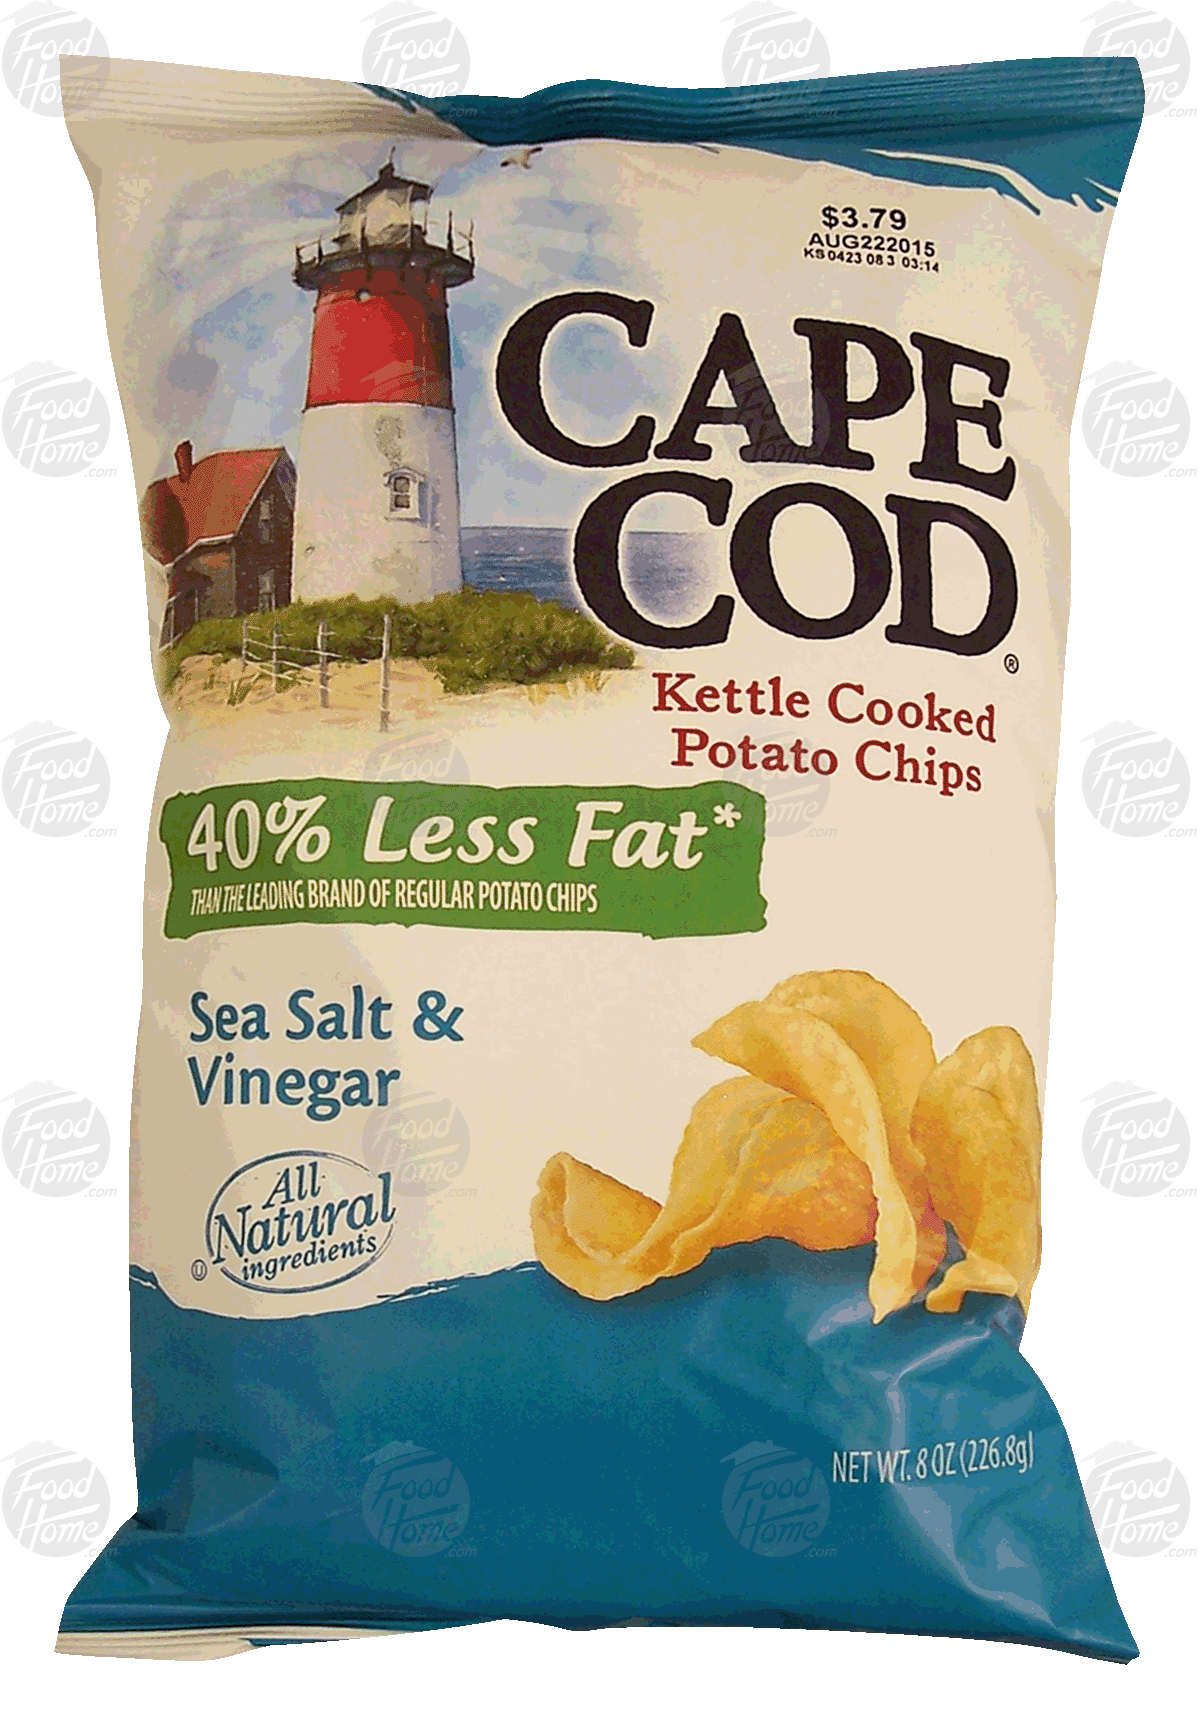 Cape Cod  kettle cooked potato chips, 40% less fat, sea salt & vinegar Full-Size Picture